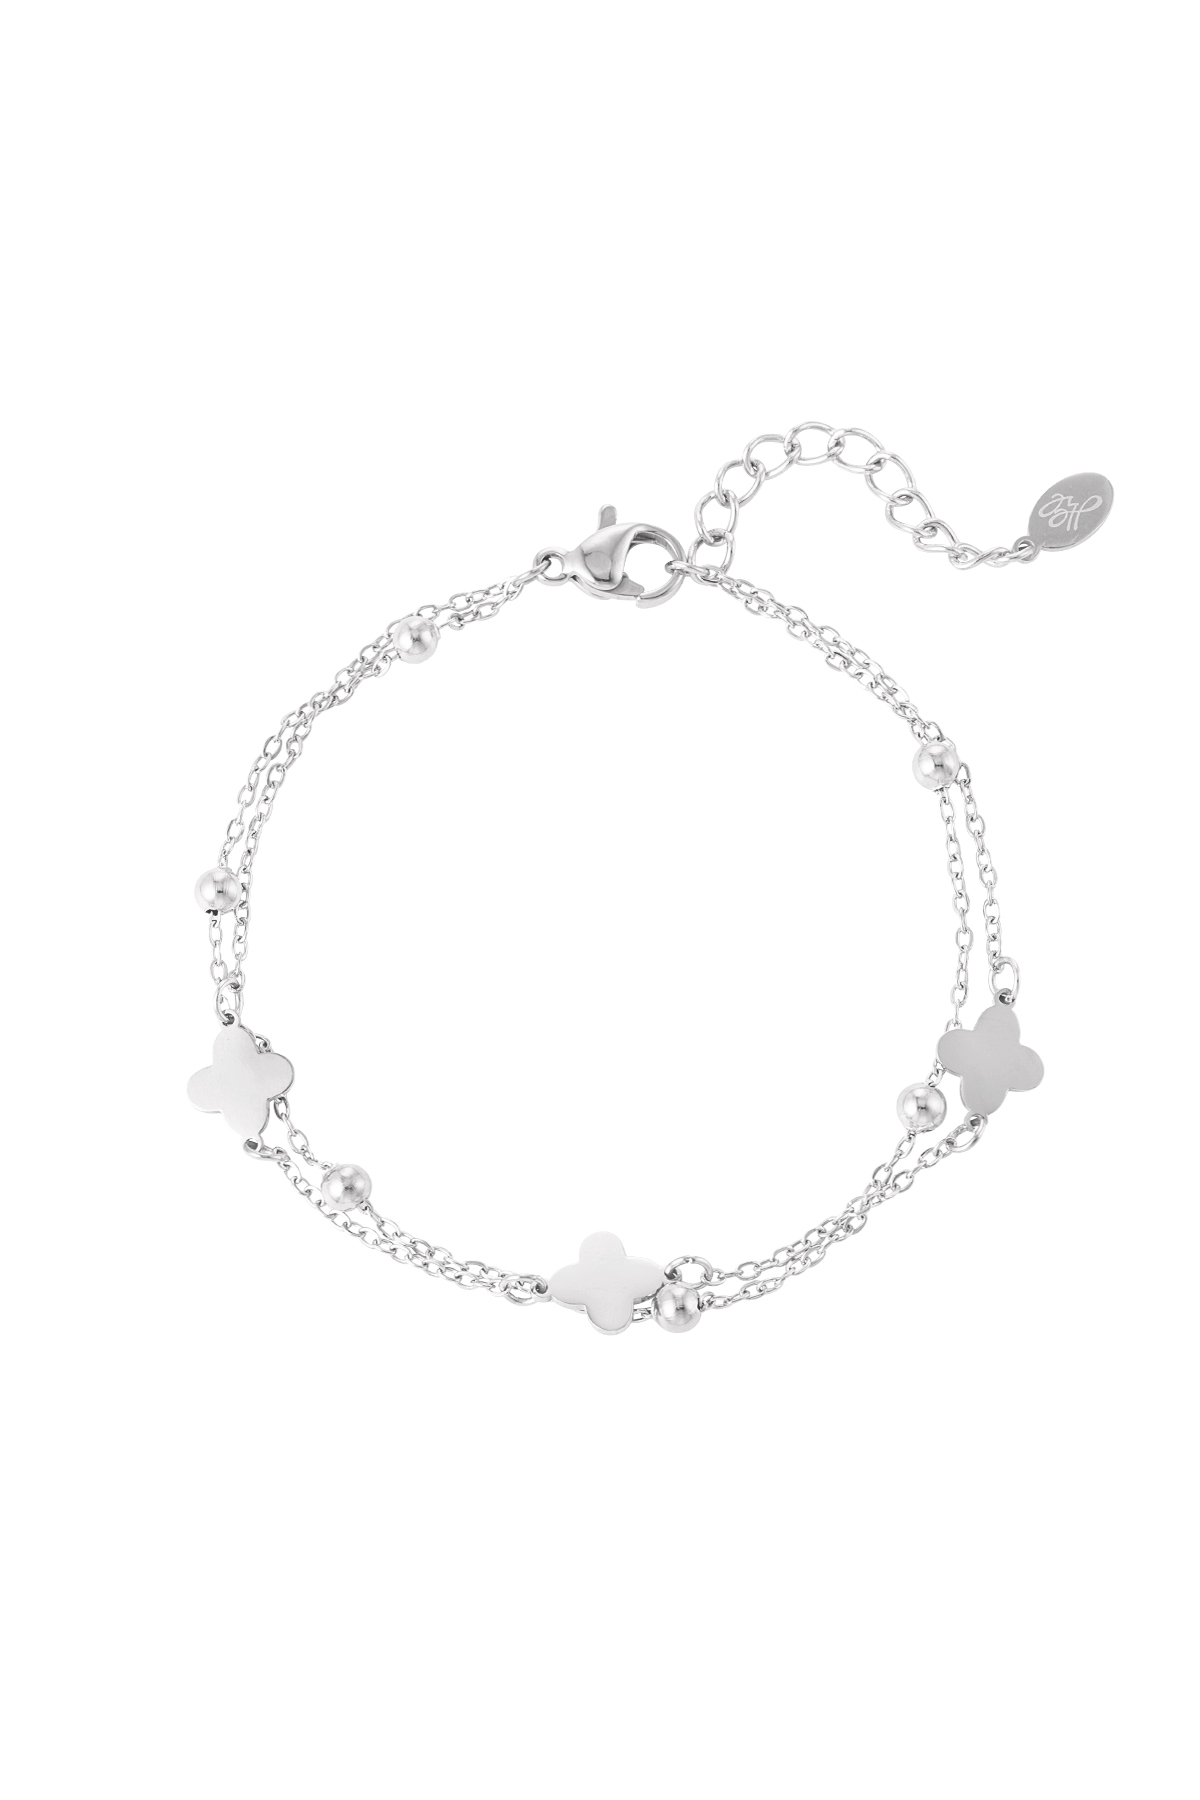 Double bracelet clover/balls - silver